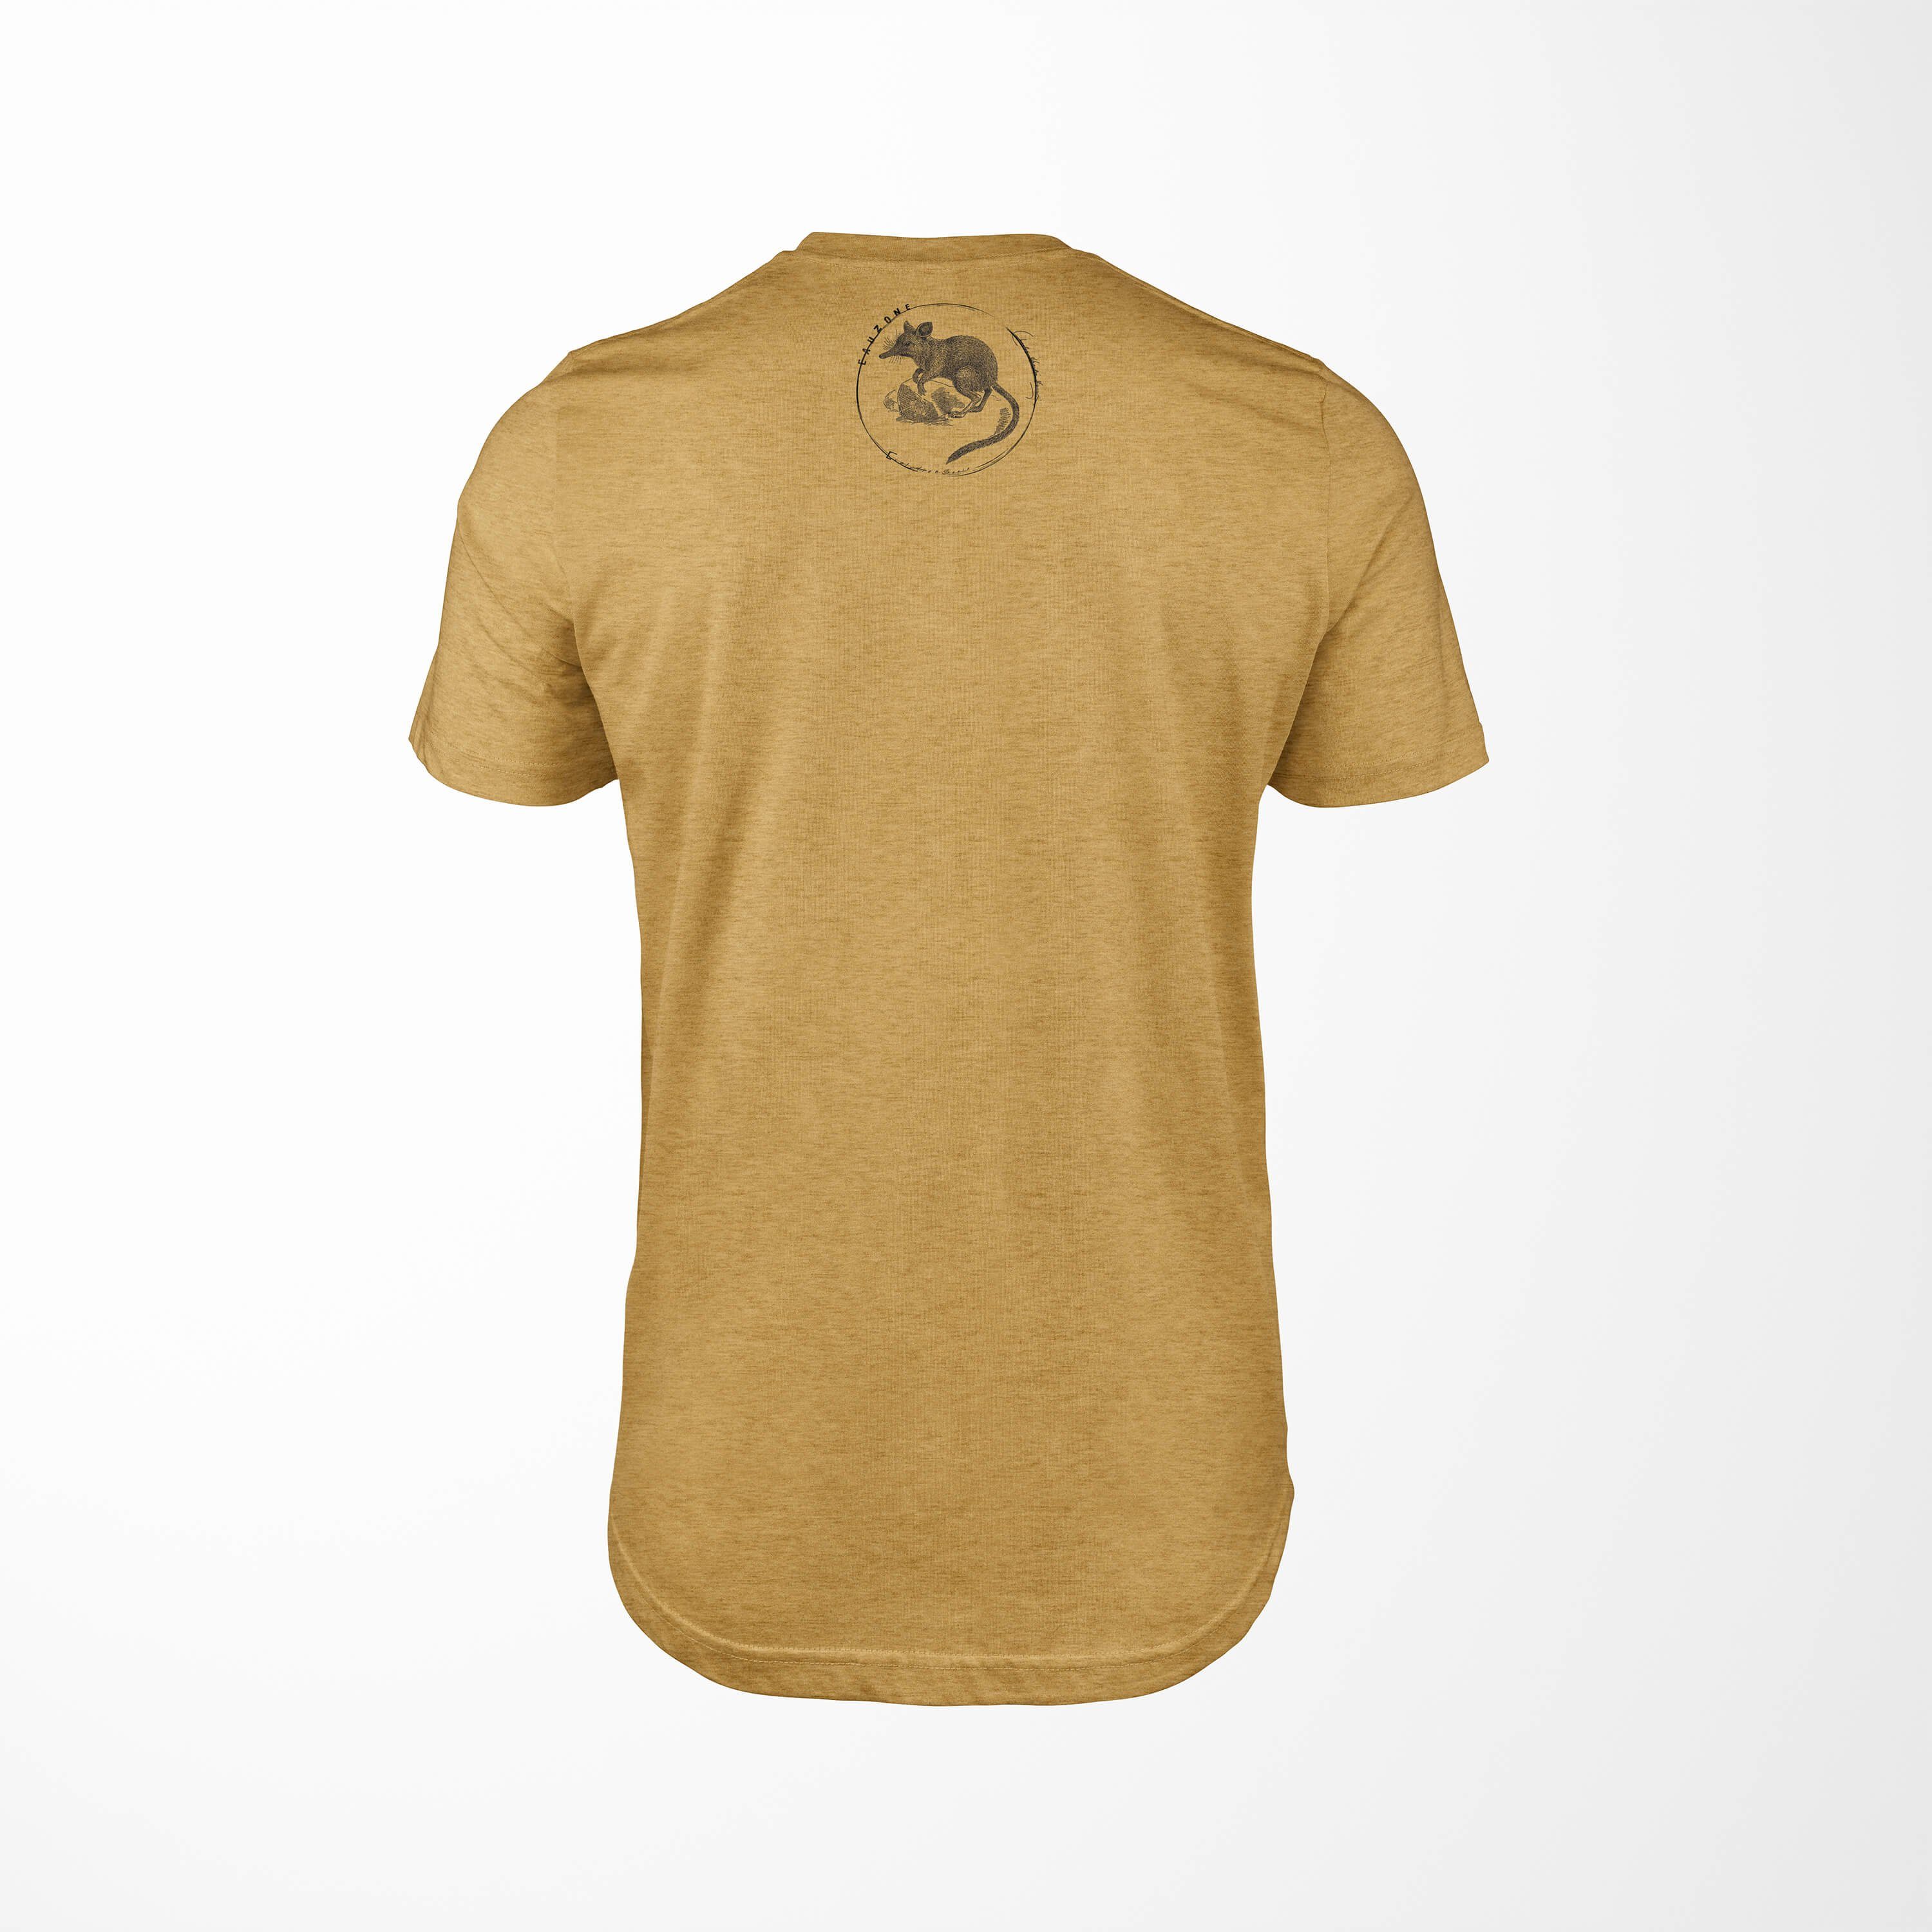 Sinus Art T-Shirt Evolution T-Shirt Gold Springspitzmaus Herren Antique